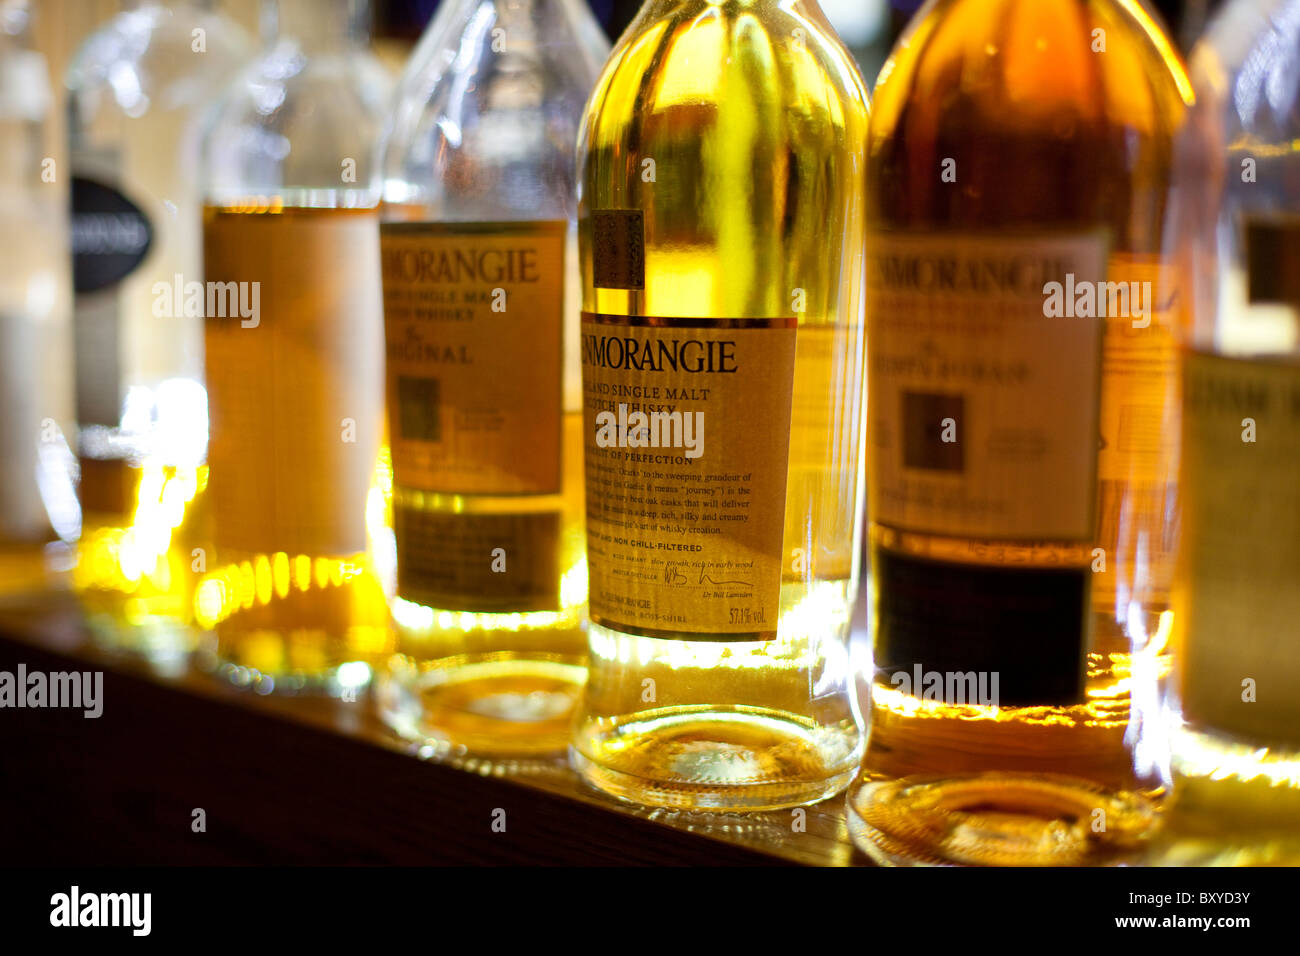 The Albannach whisky bar and restaurant, Trafalgar Square, London. Stock Photo